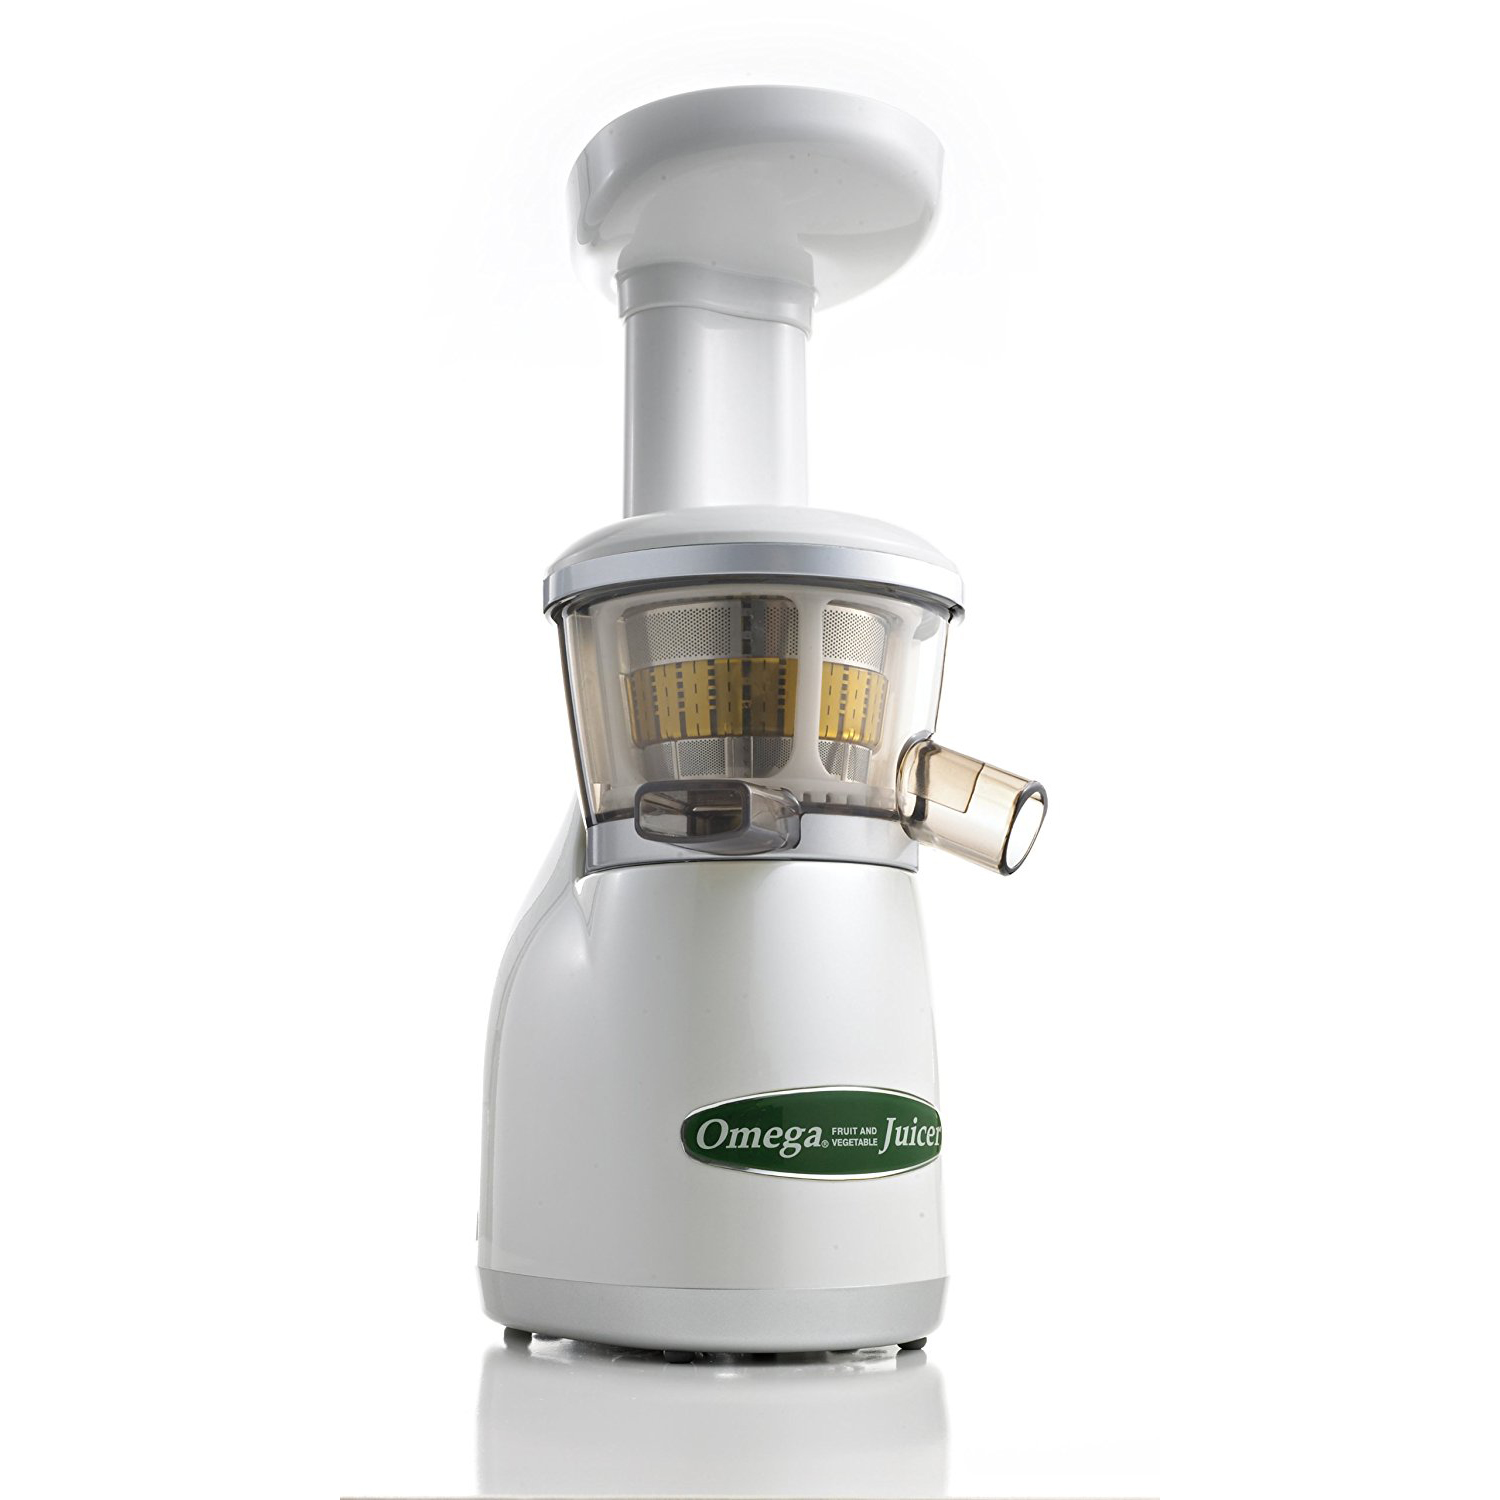  Omega Juicer Cleaning Brush for VRT VERT 350 400 330 8006 8004  cleaner replace : Home & Kitchen